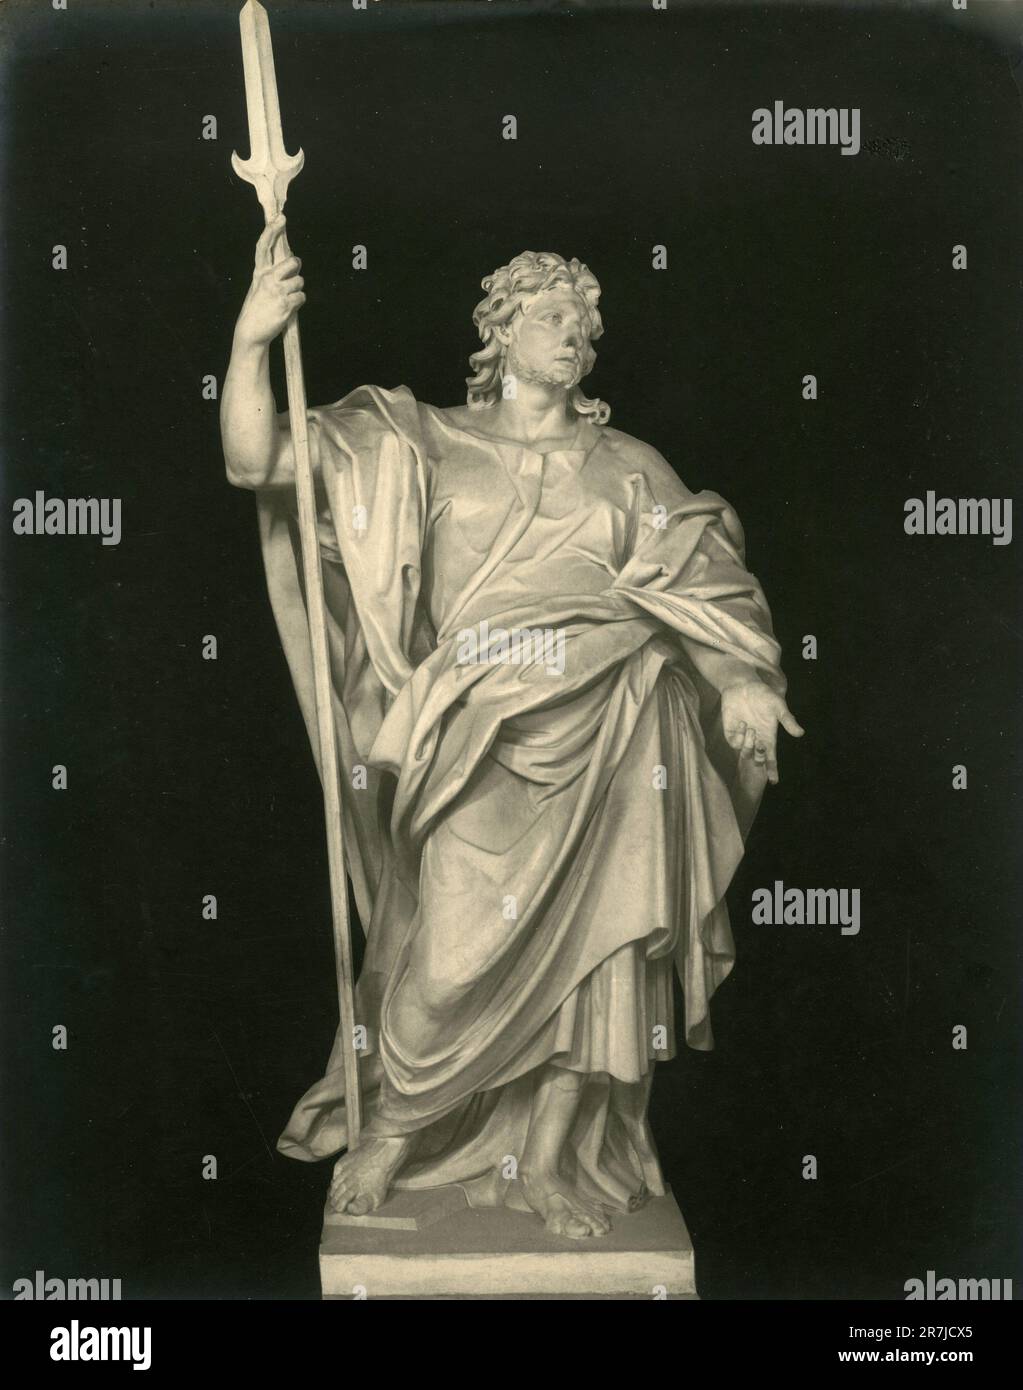 Ancient marble statue of St. Jude Thaddeus by Italian artist Lorenzo Ottoni, Lateran church, Rome, Italy 1900s Stock Photo